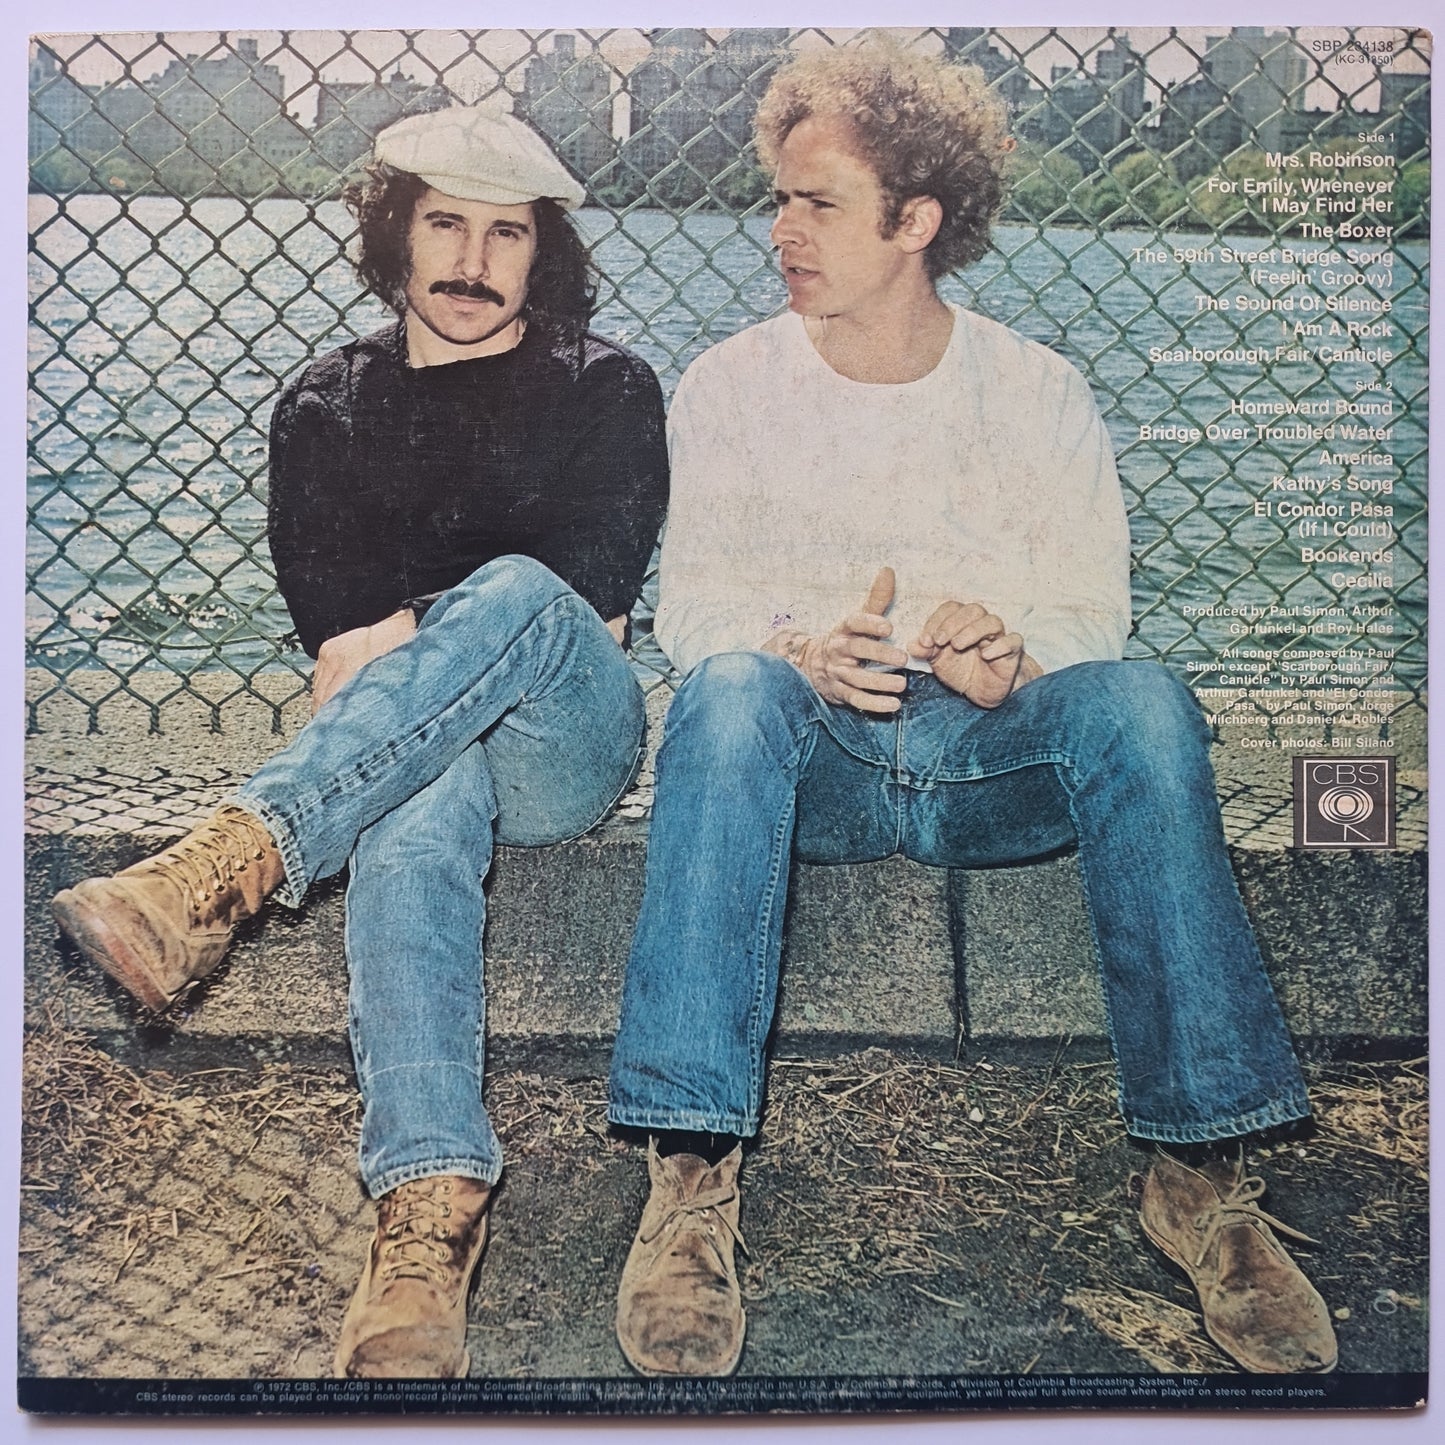 Simon & Garfunkel – Simon & Garfunkel's Greatest Hits - 1972 - Vinyl Record